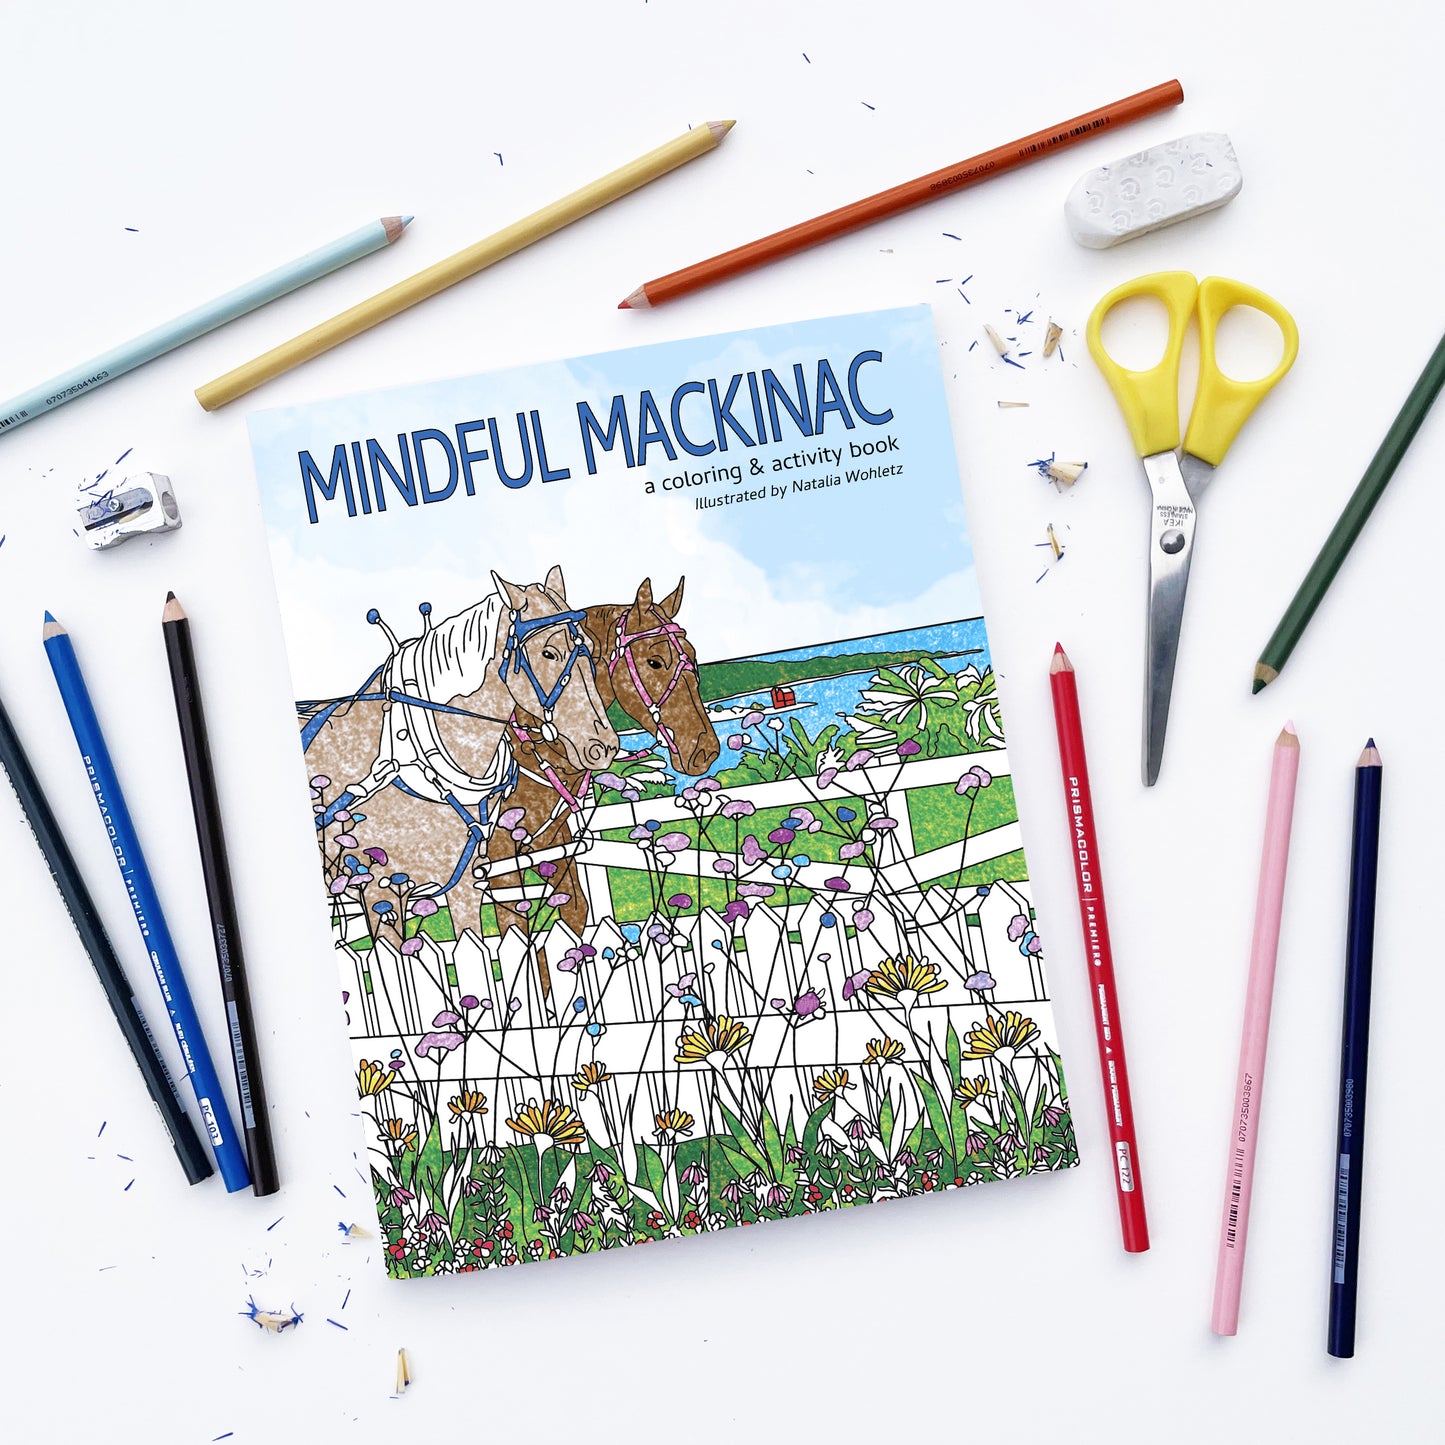 Mindful Mackinac: A Coloring & Activity Book